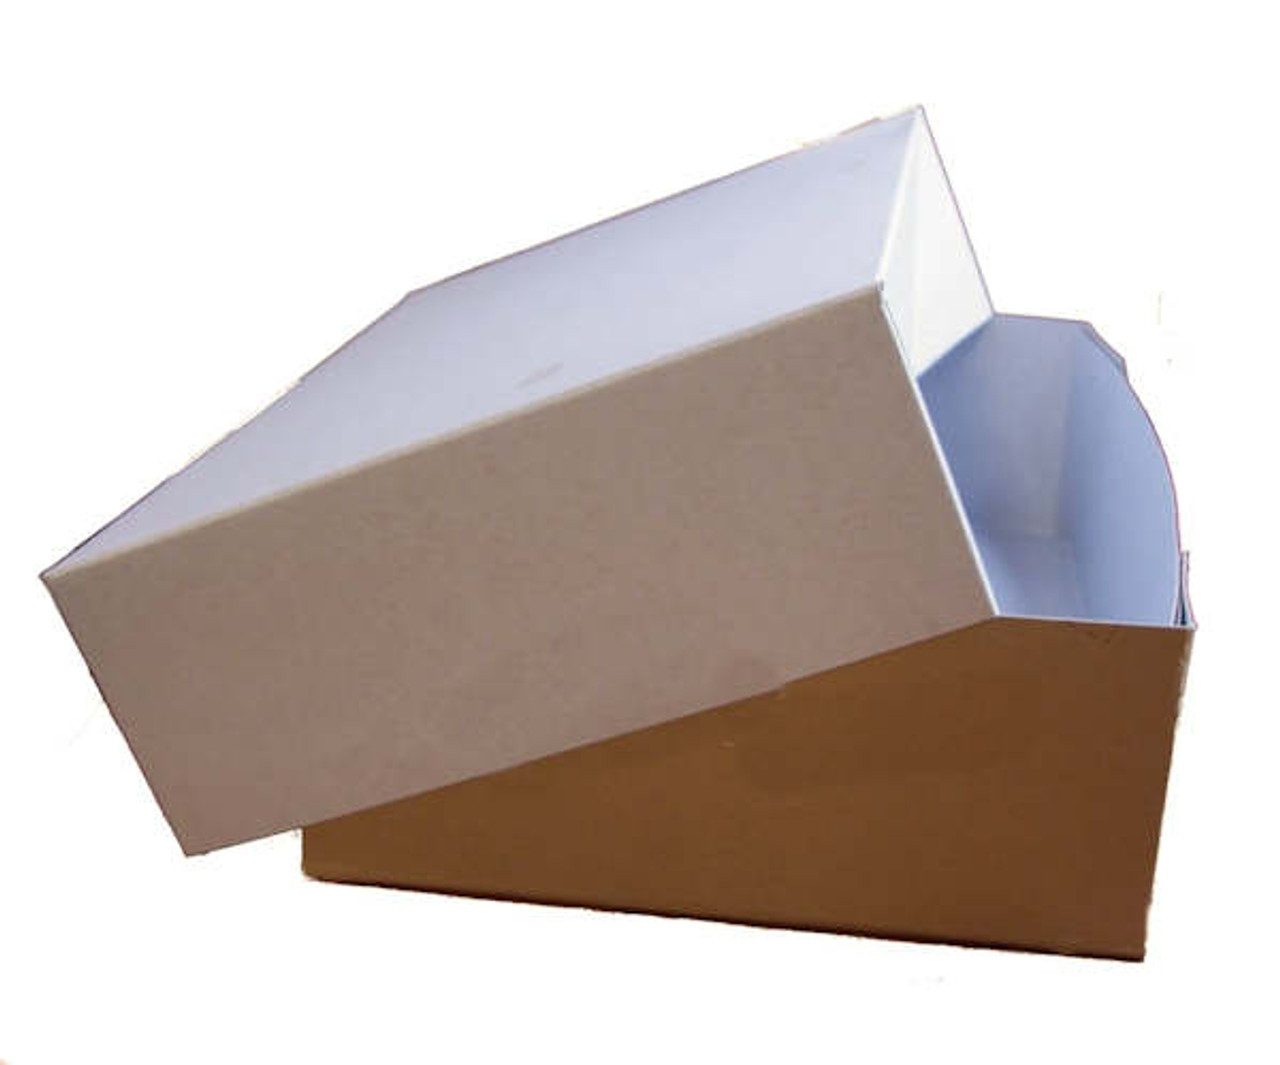 Sample Euro Waxed Lined Cardboard Box and Lid